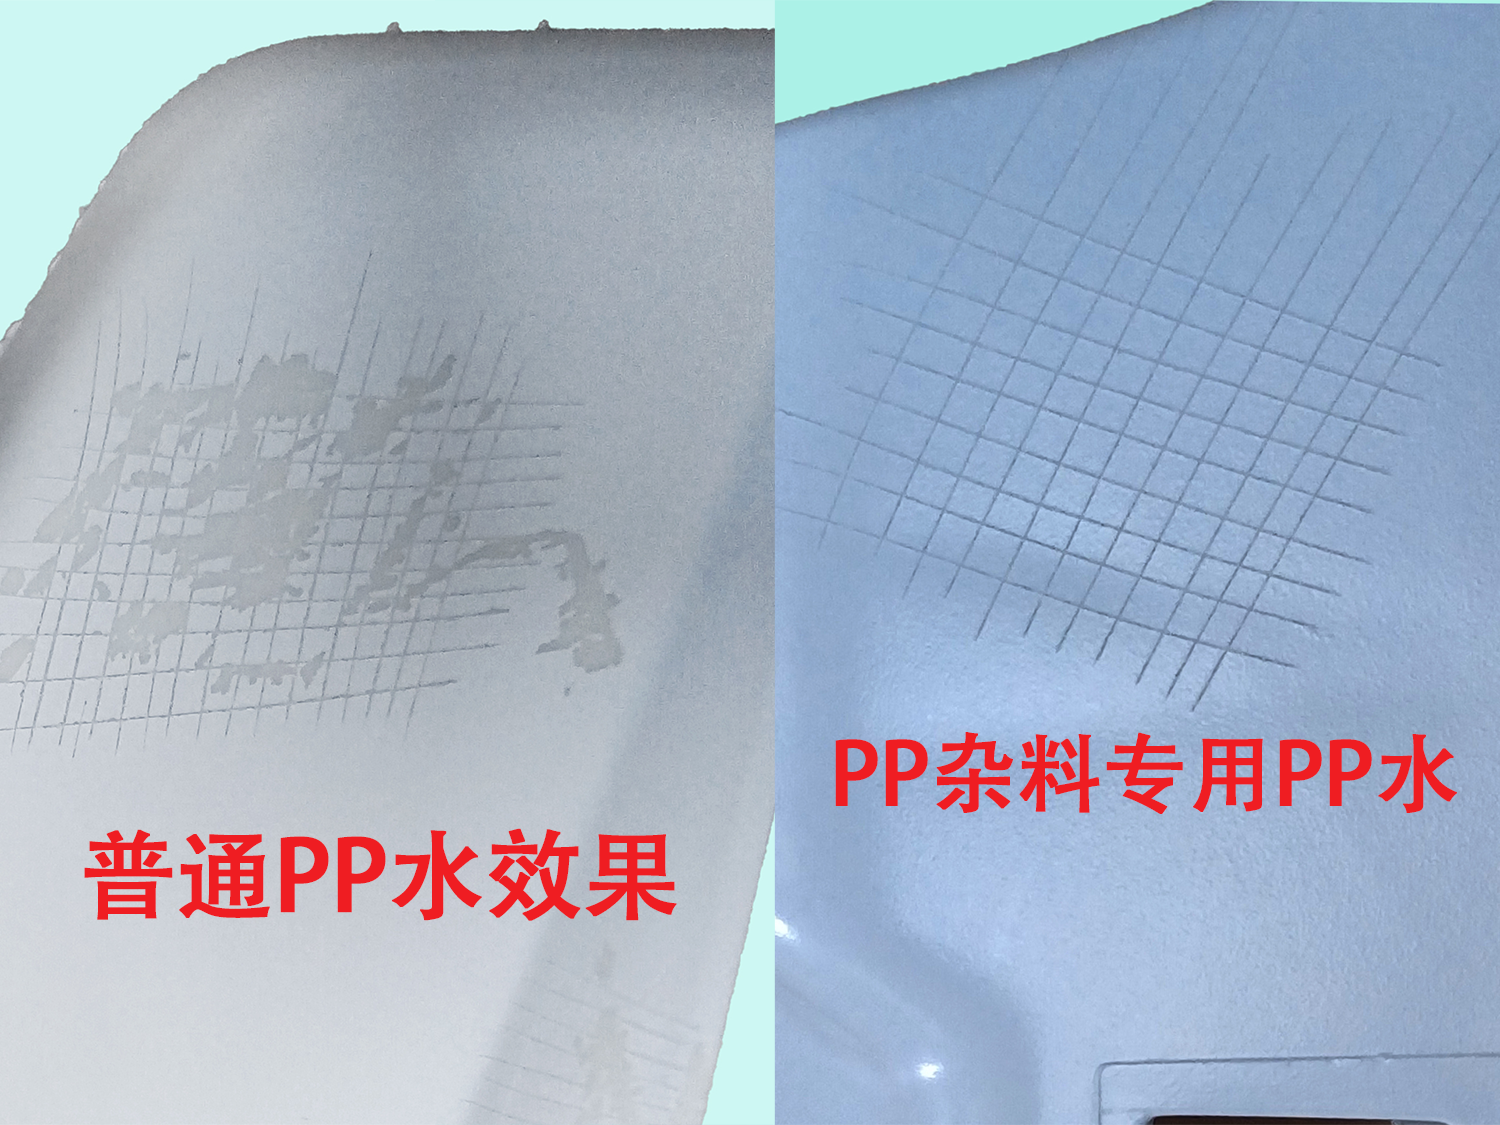 PP 杂料素材喷 PU 漆掉漆问题的解决方法